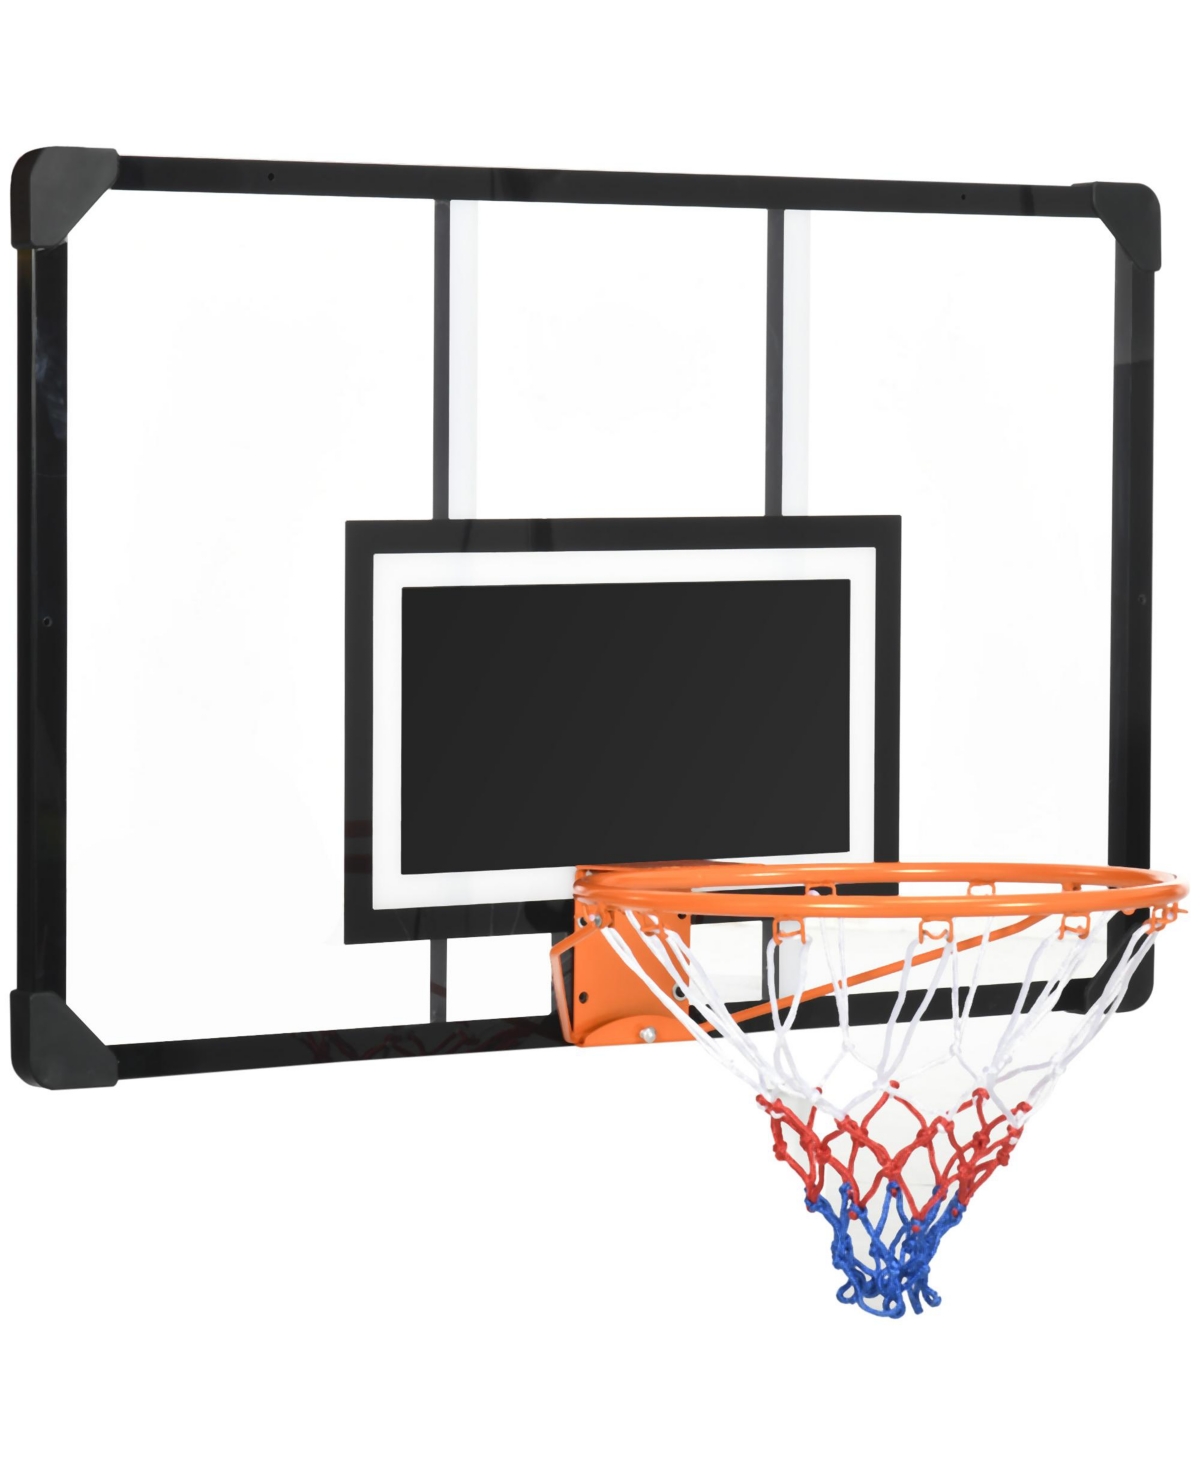 Wall Mounted Basketball Hoop with Shatter Proof Backboard - Black, clear, orange